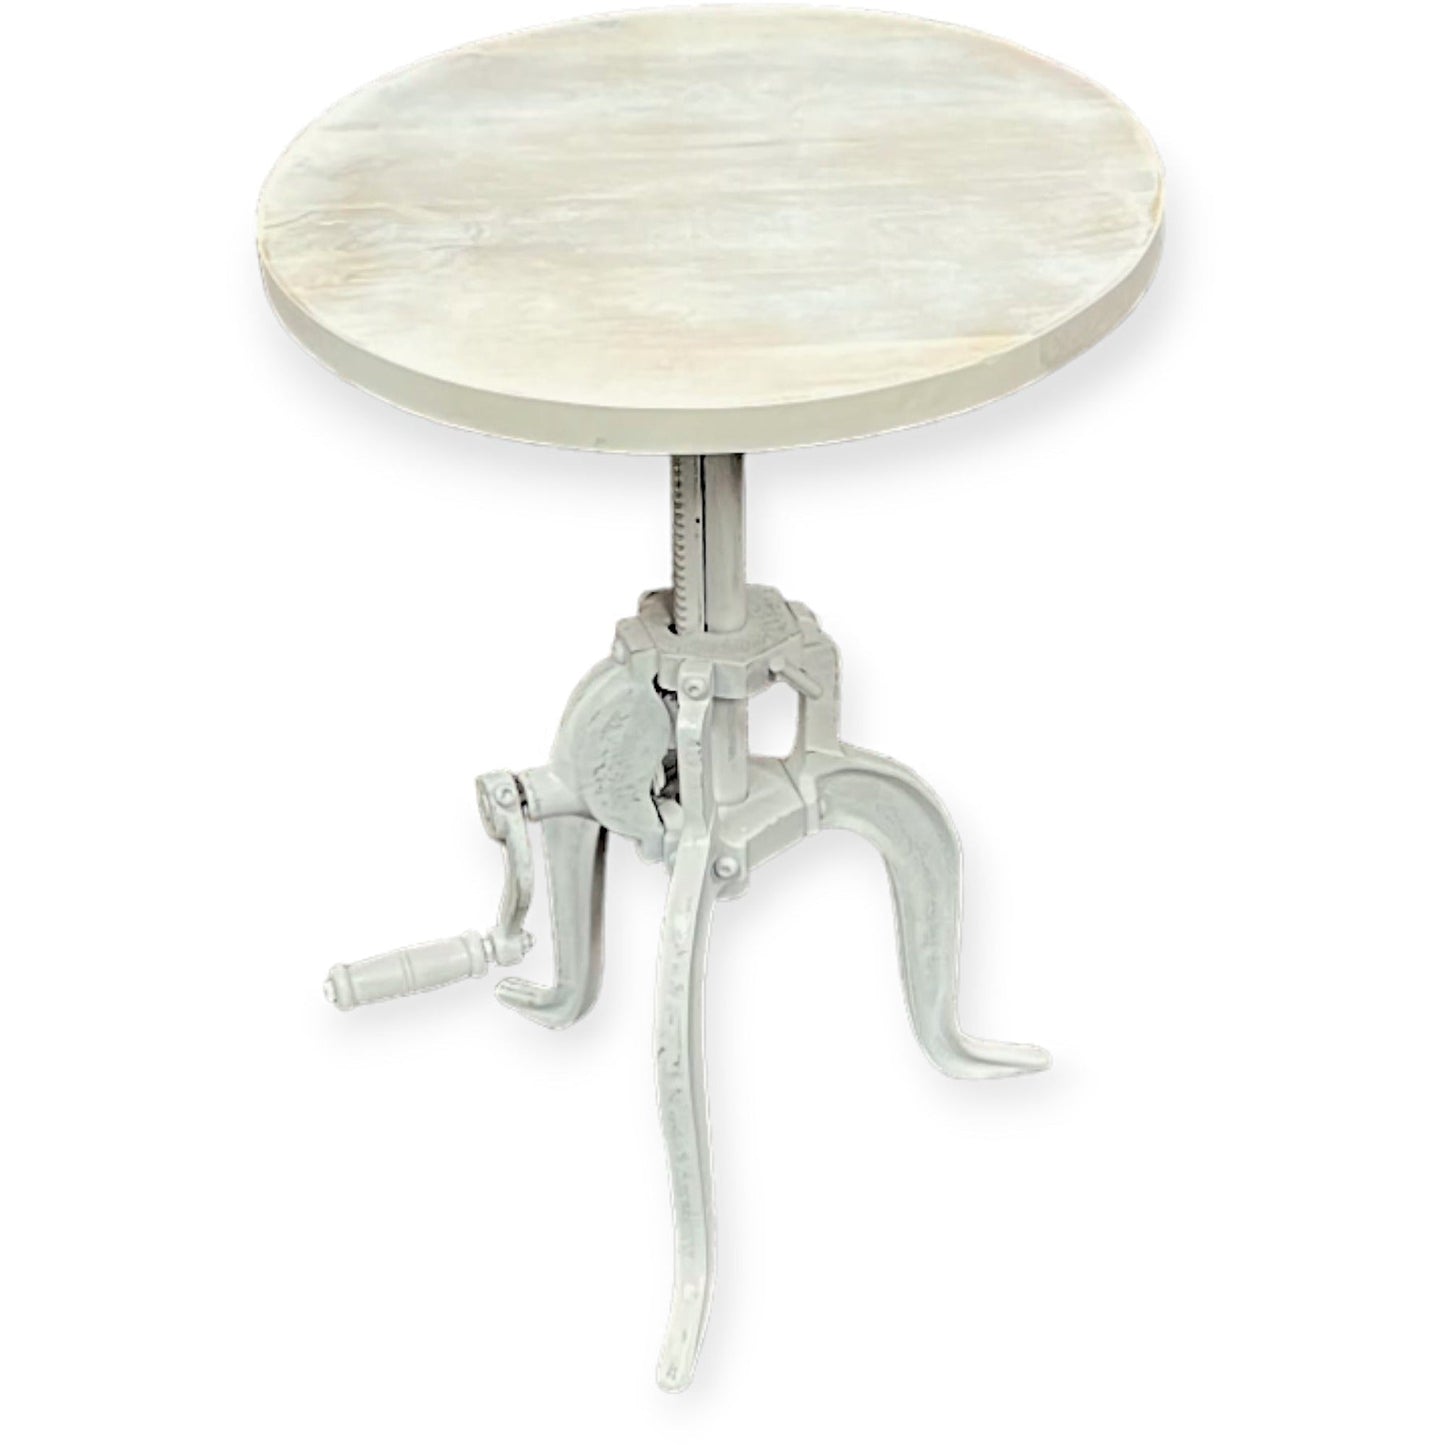 20% Off, Kai Adjustable Crank Side Table, Antique White - iDekor8